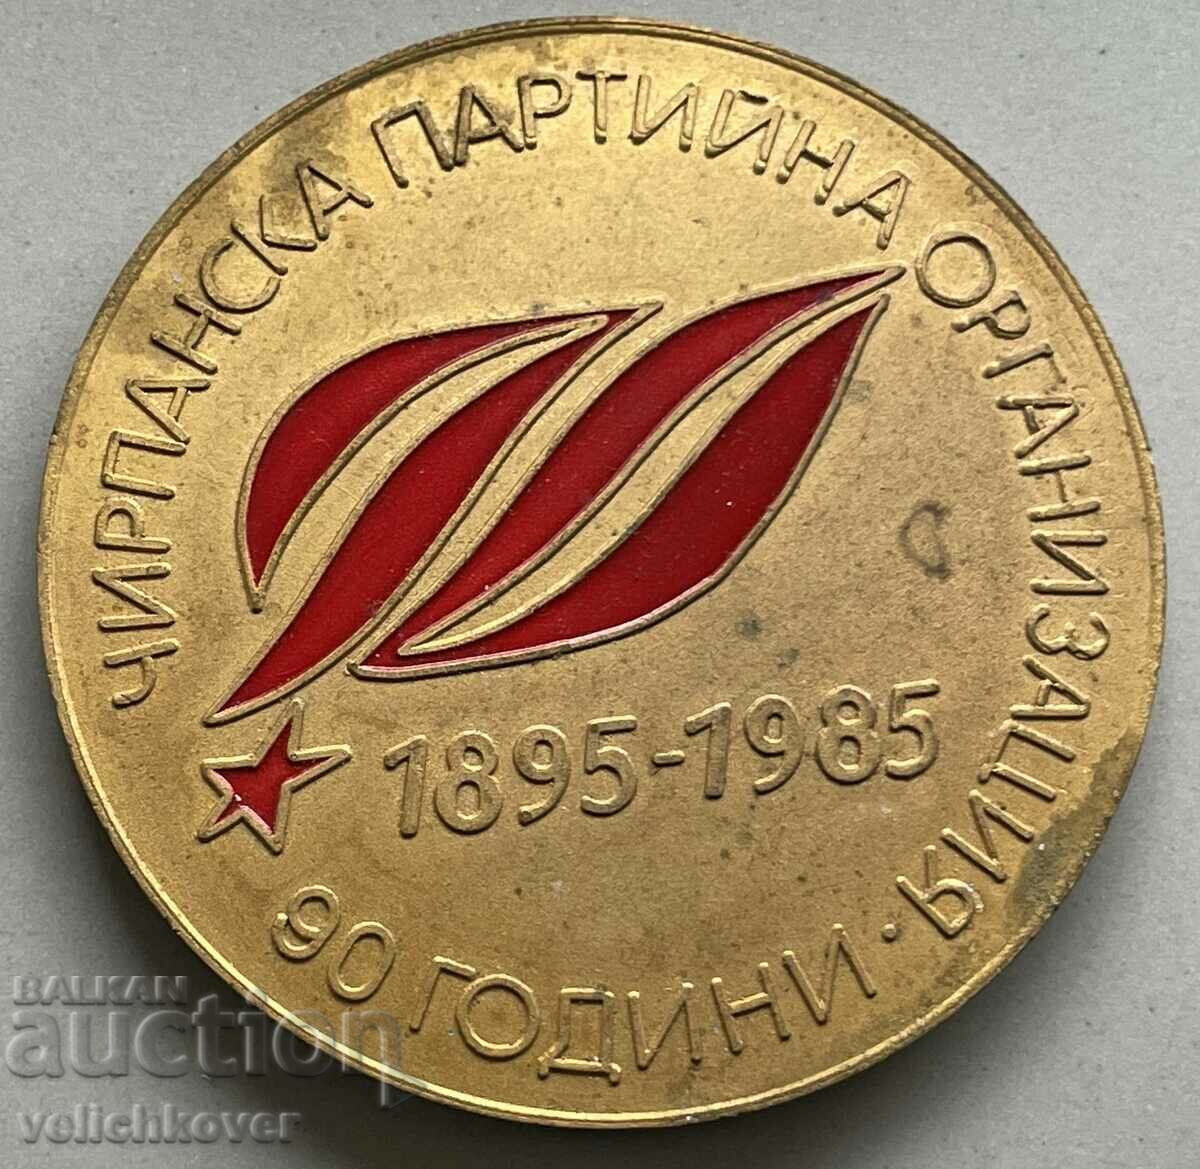 3412 Placa Bulgariei 90 de ani Organizația Partidului Chirpan 1985